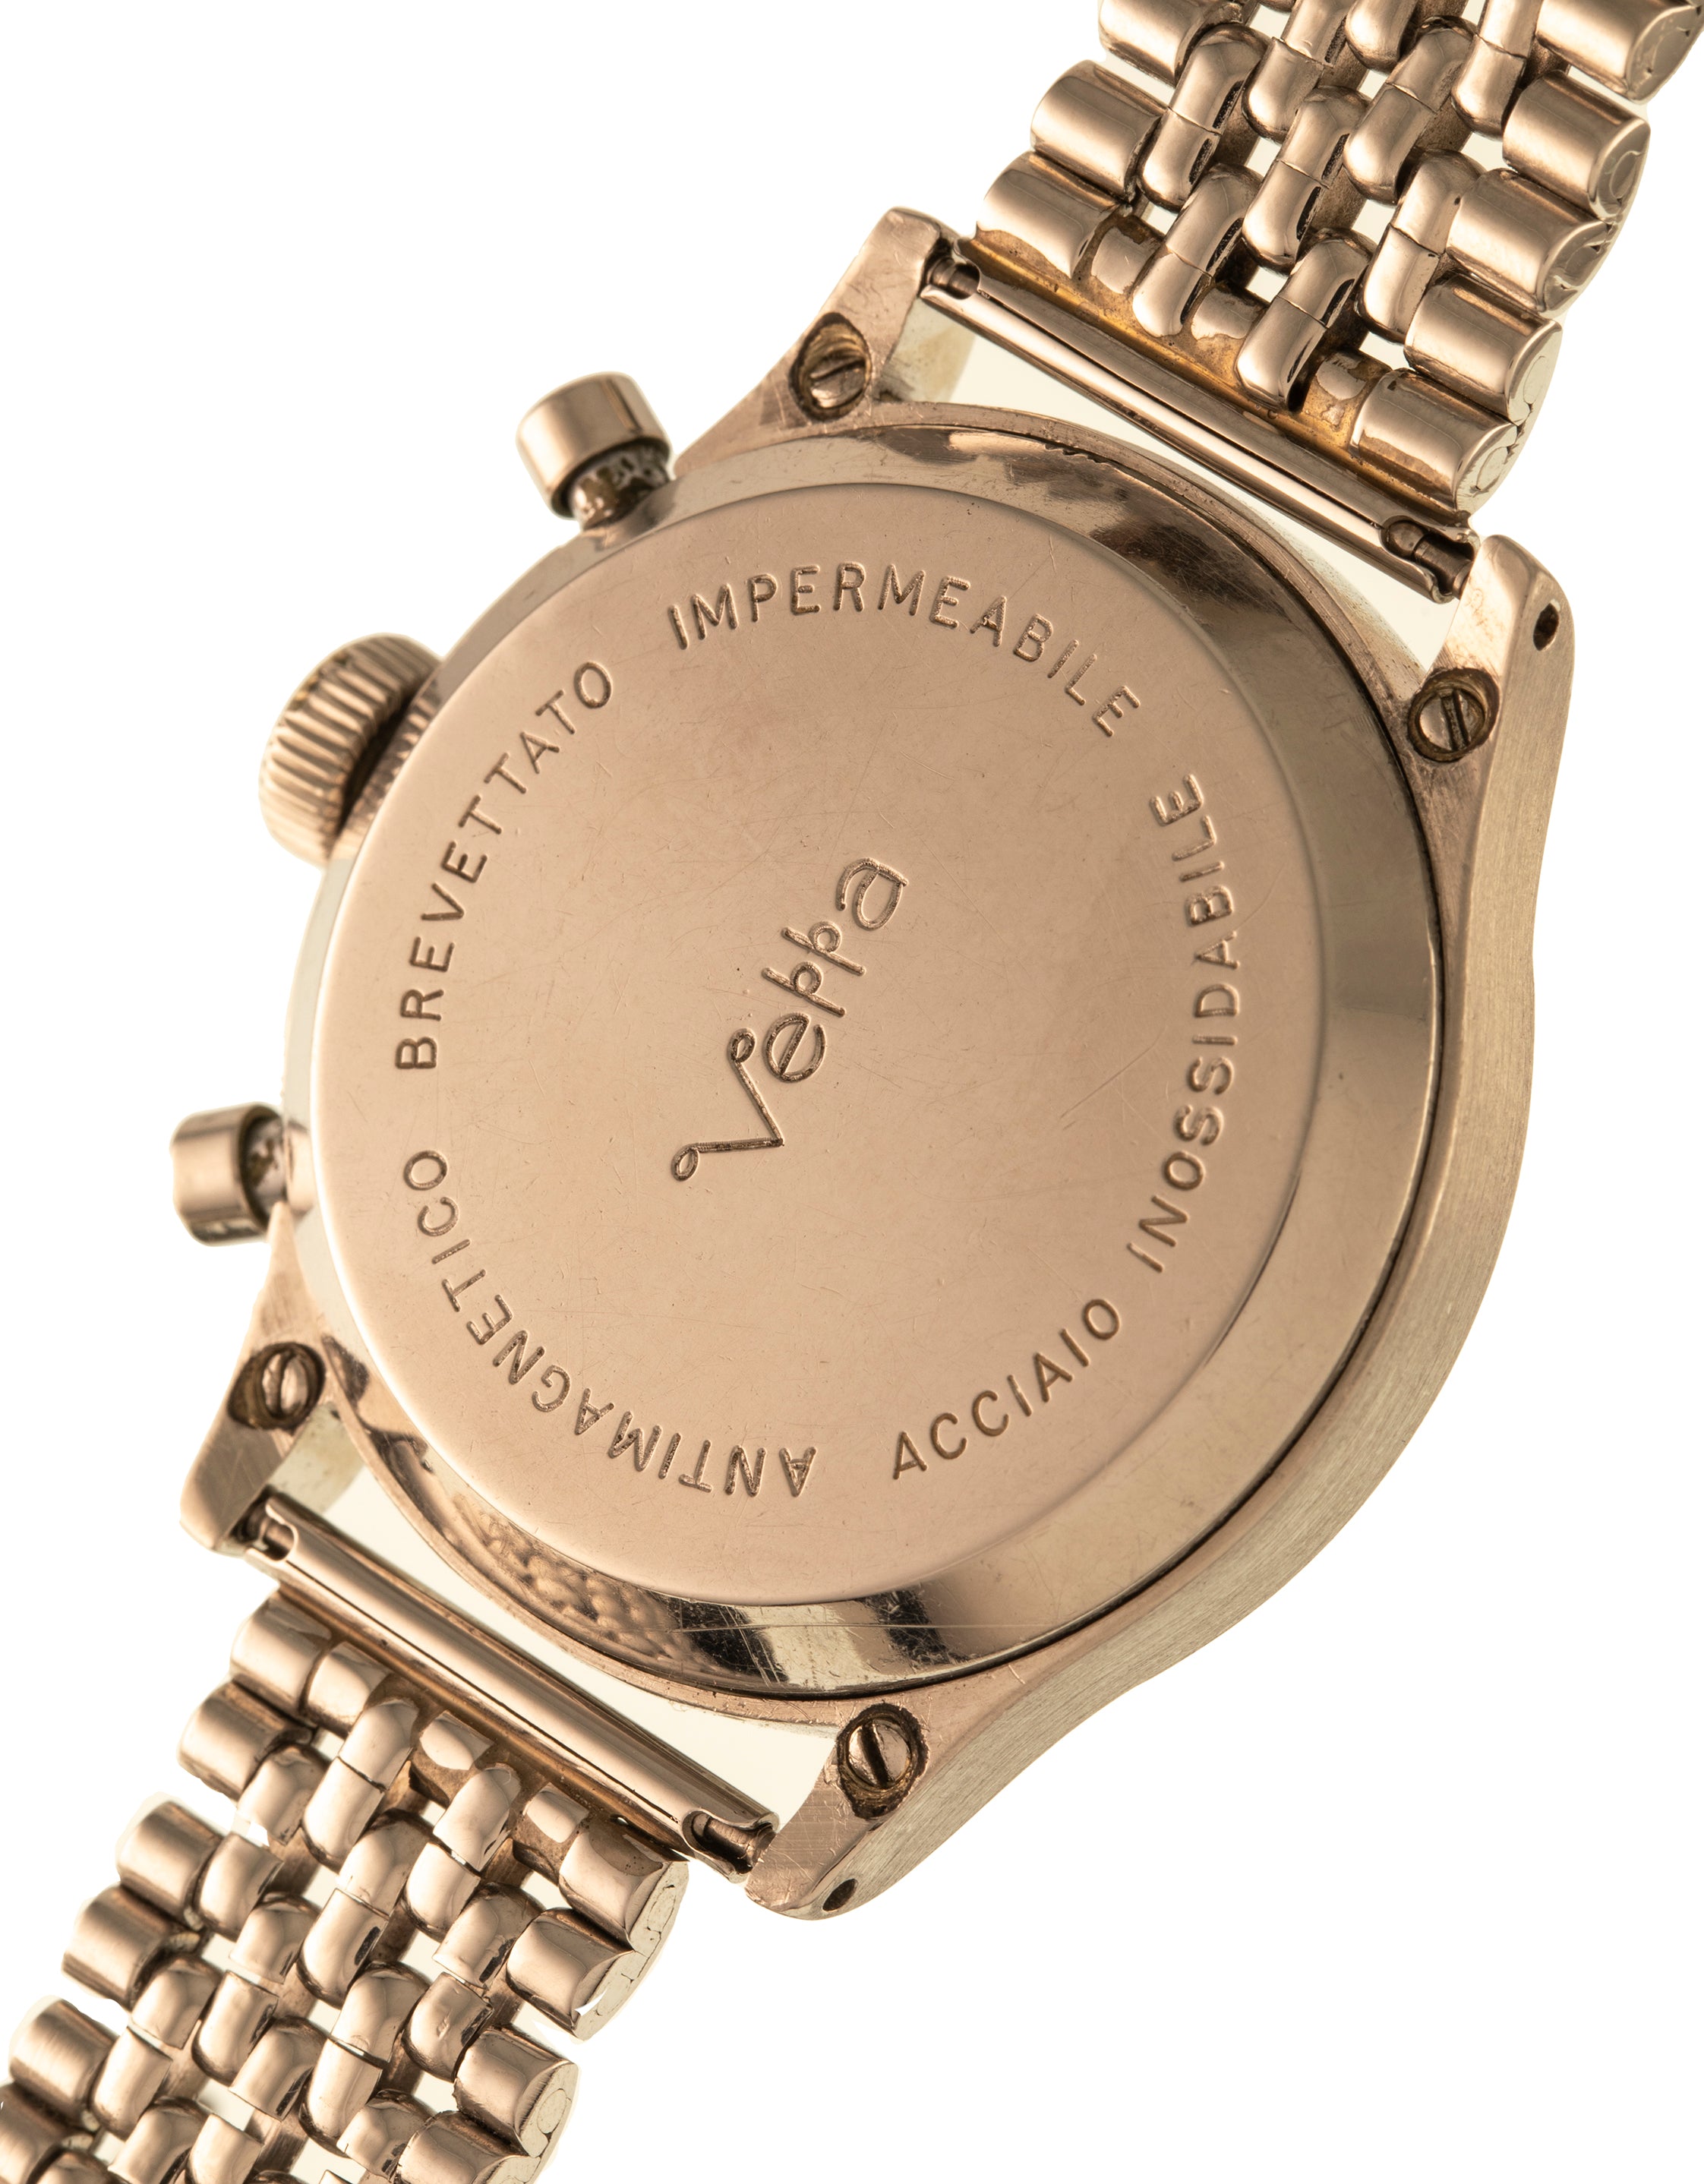 Vetta "Impermeable" Antimagnetique Chronograph stainless steel  with bracelet - back